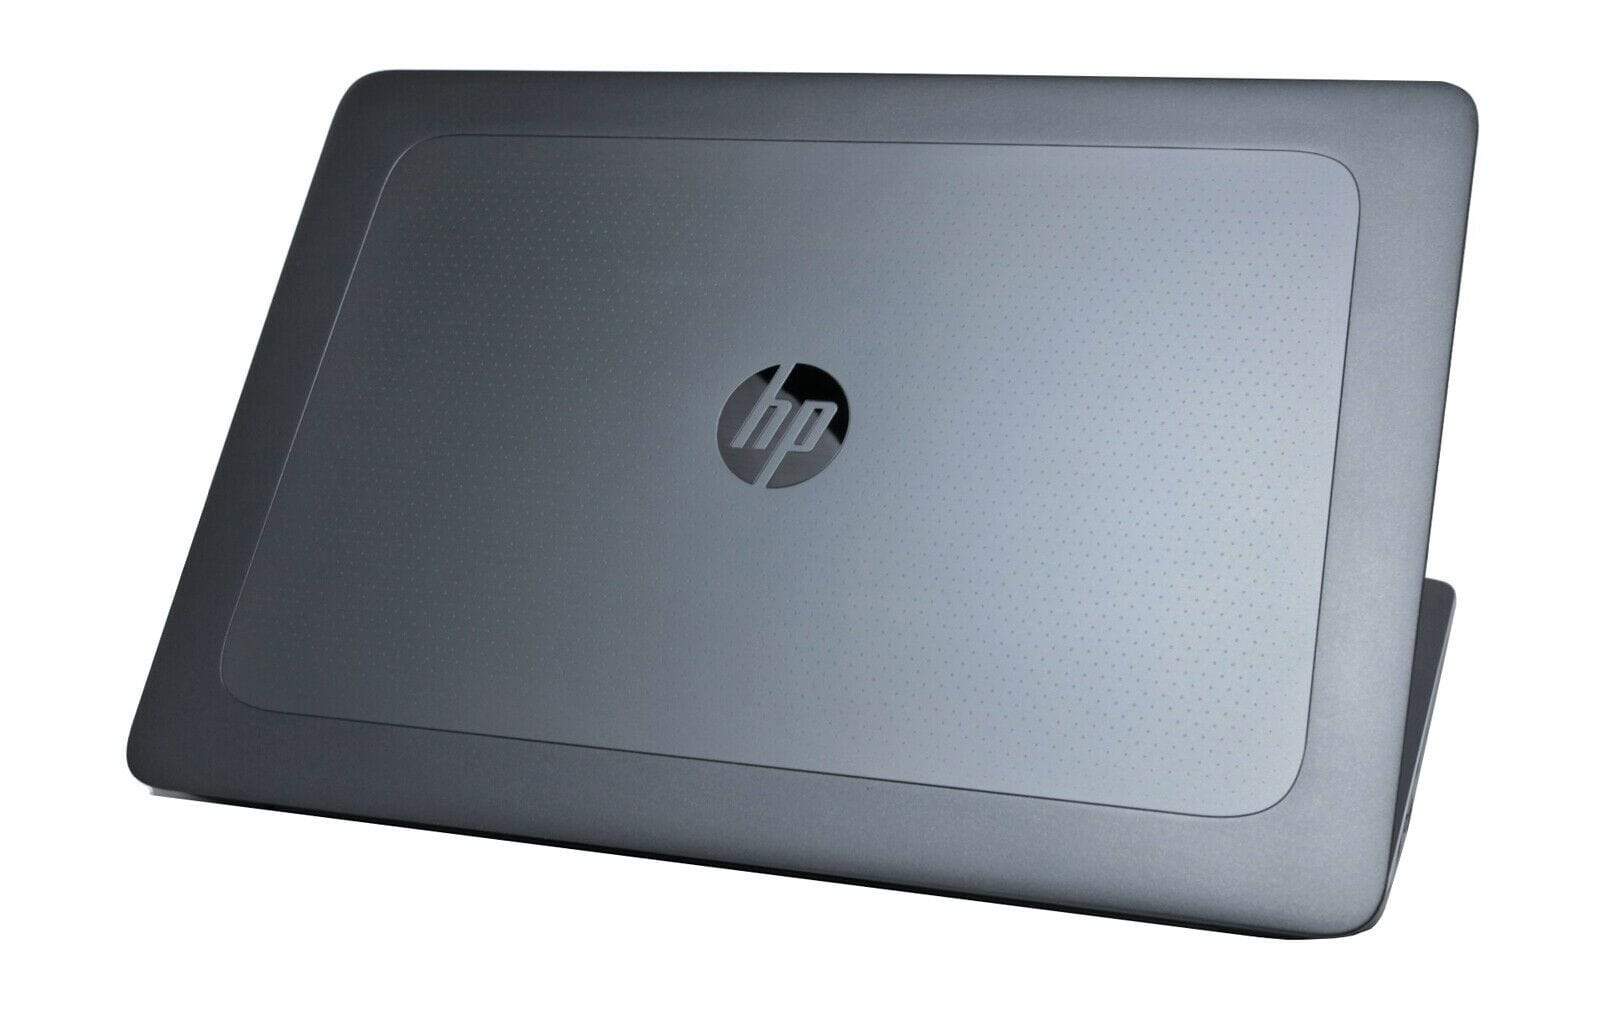 HP ZBook 15 G3 Workstation Core i7, 16GB RAM, 256GB SSD, Quadro, Warranty - CruiseTech